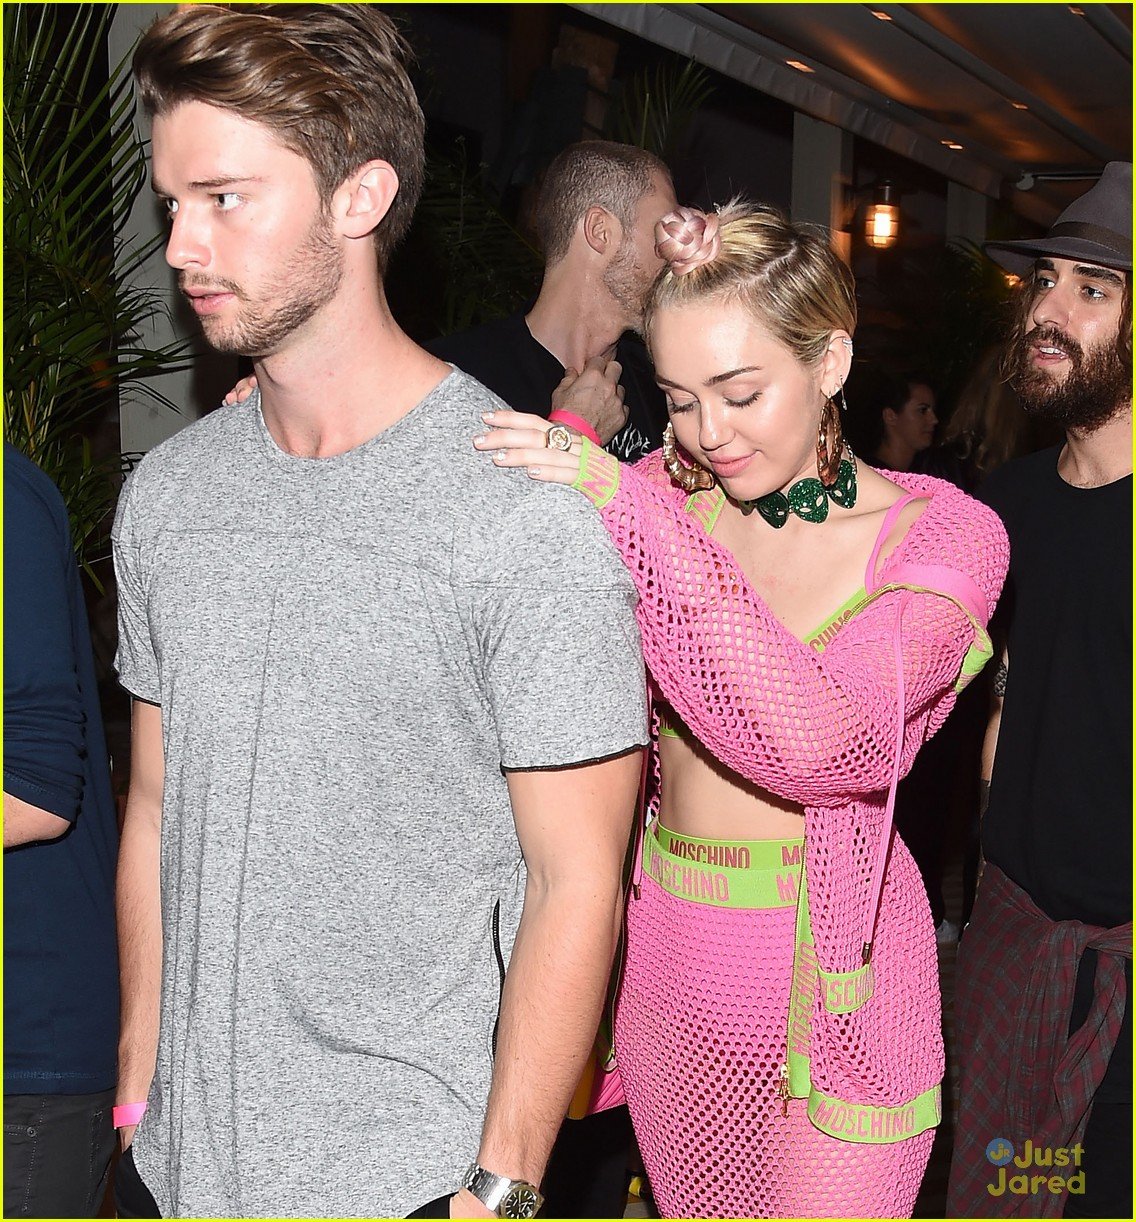 Full Sized Photo Of Miley Cyrus Patrick Schwarzenegger Jeremy Scott Miami Party 05 Miley Cyrus